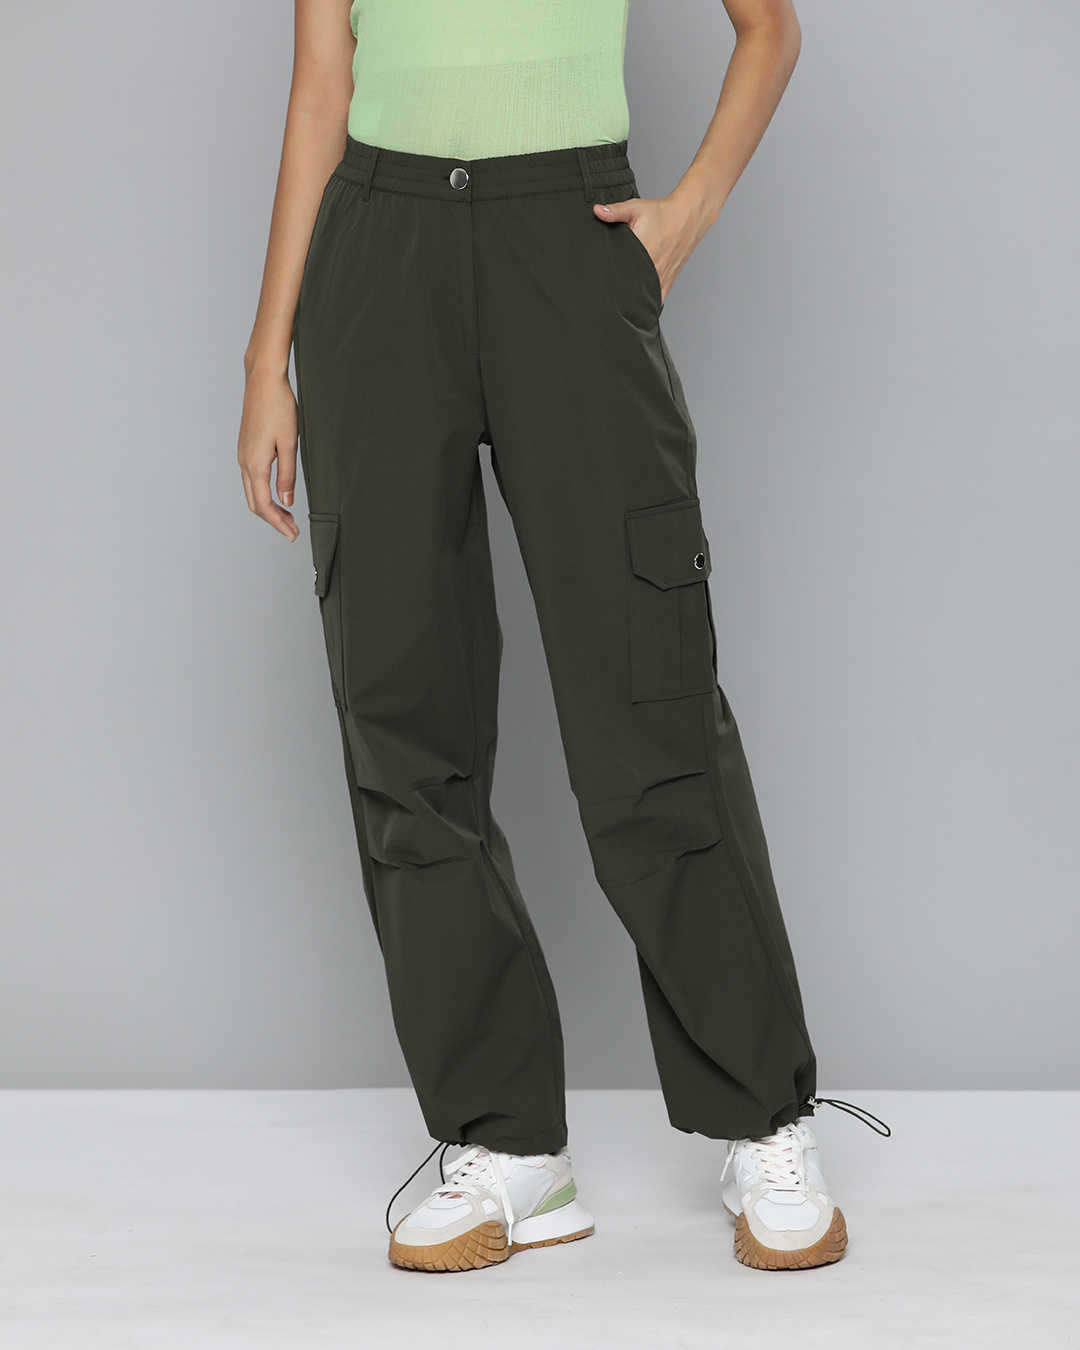 Buy Women's Green Loose Comfort Fit Cargo Parachute Pants Online at ...